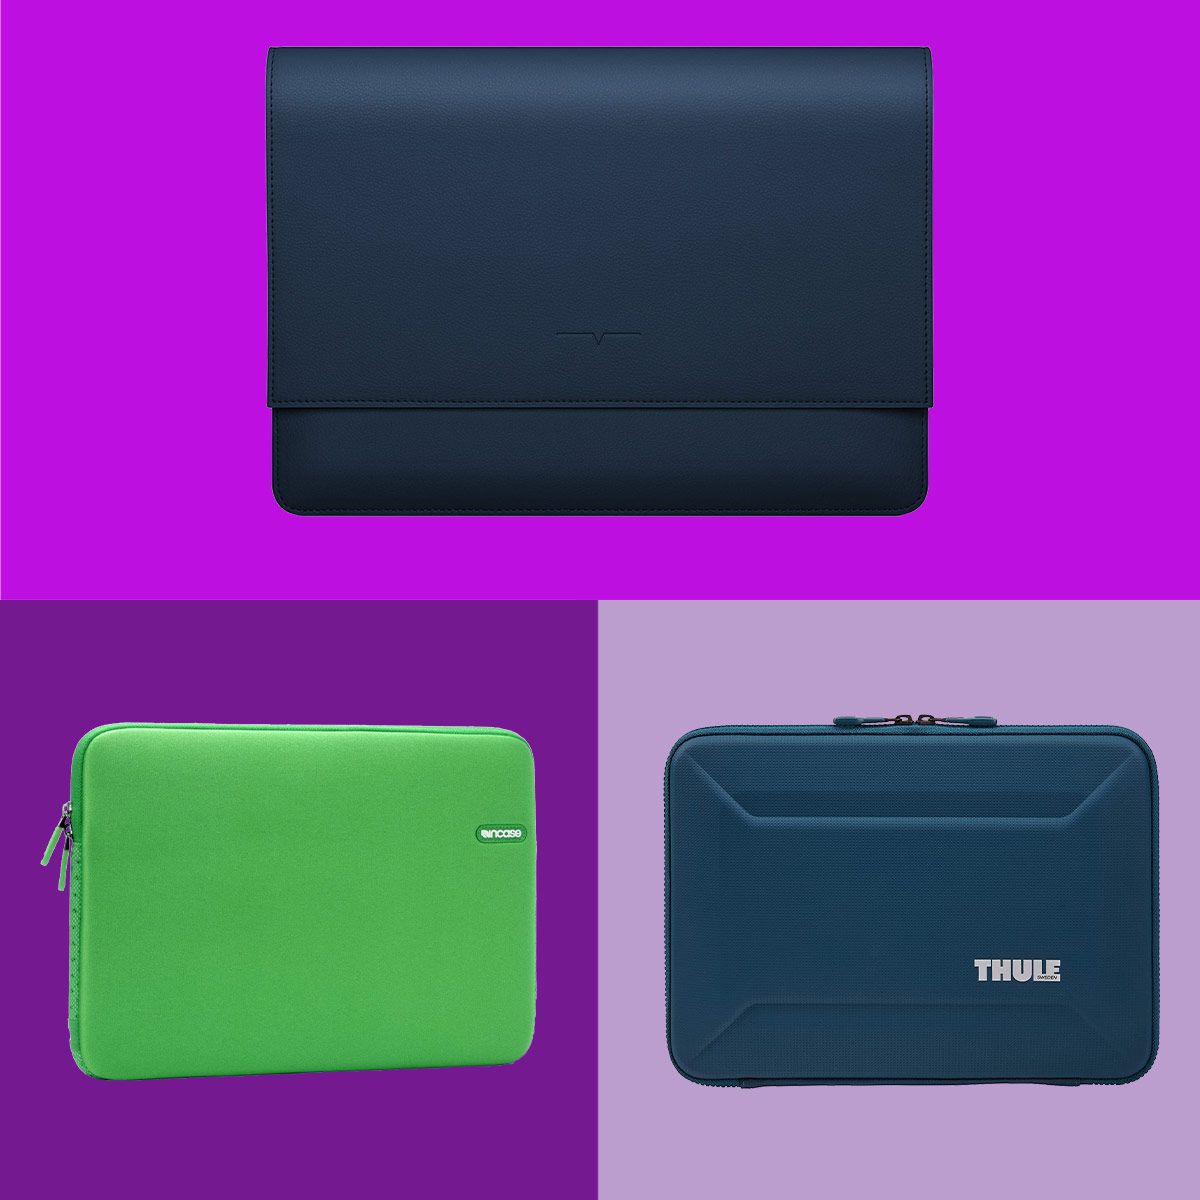 Personalized Laptop case Laptop Bag Custom Name Pink Laptop Sleeve Device Sleeve